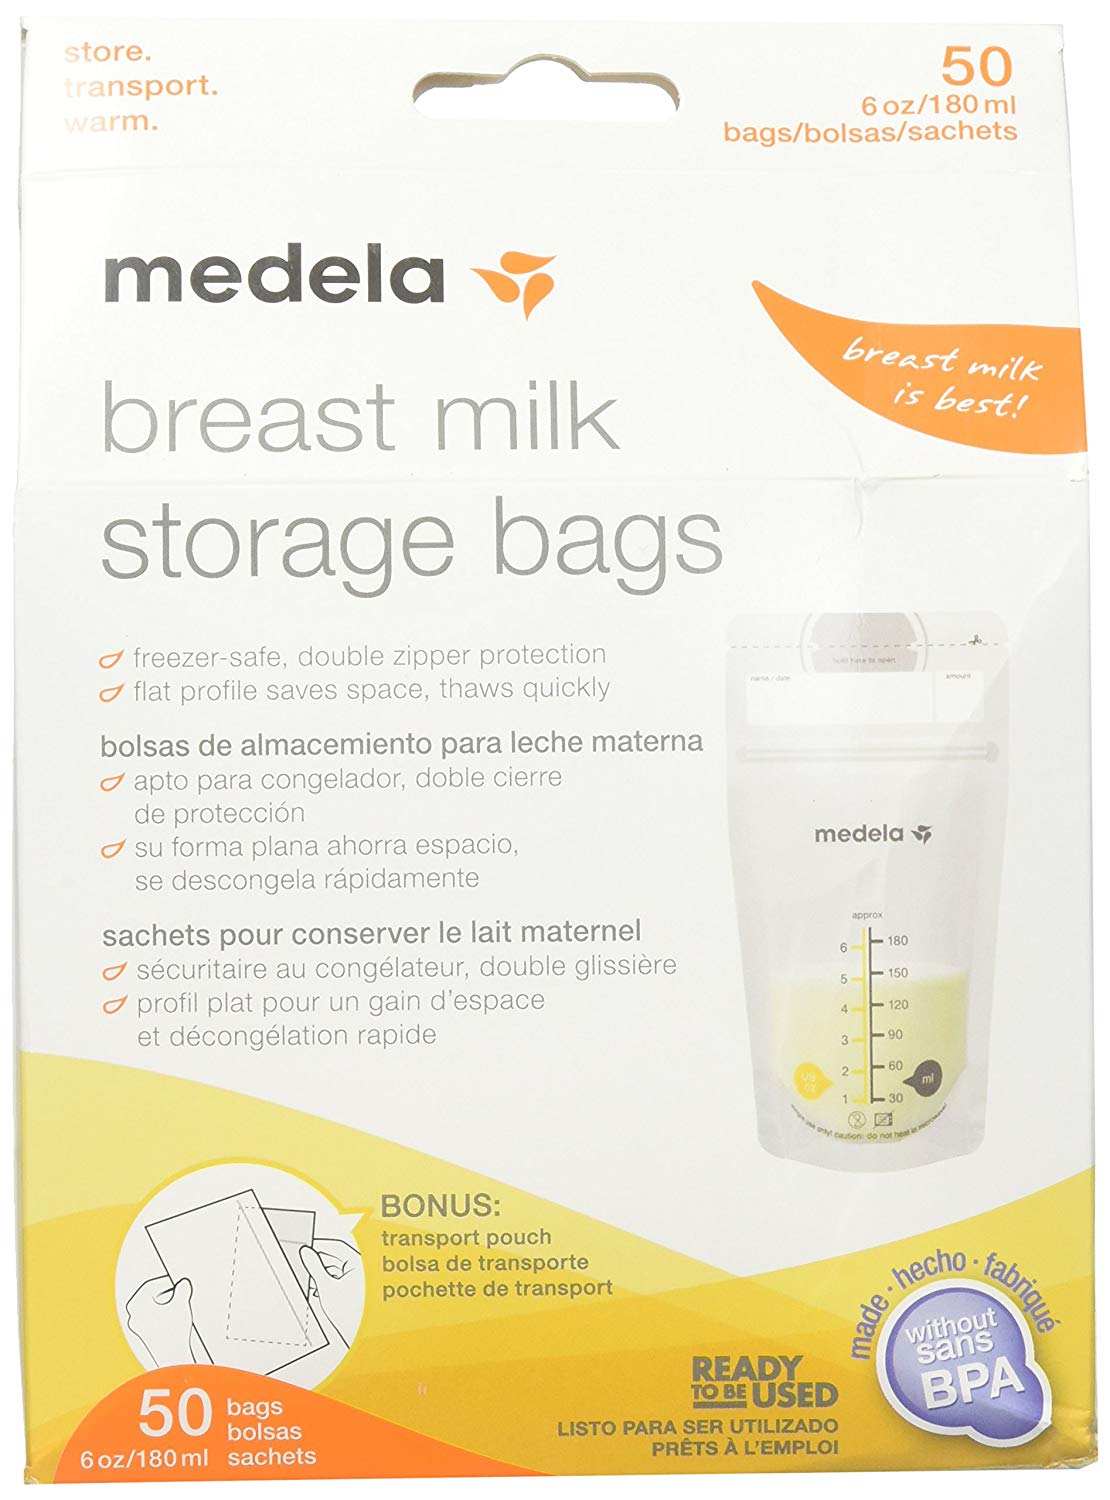 https://www.mommygear.com/media/medela/medela-breast-milk-storage-bags-package-back-50.jpg